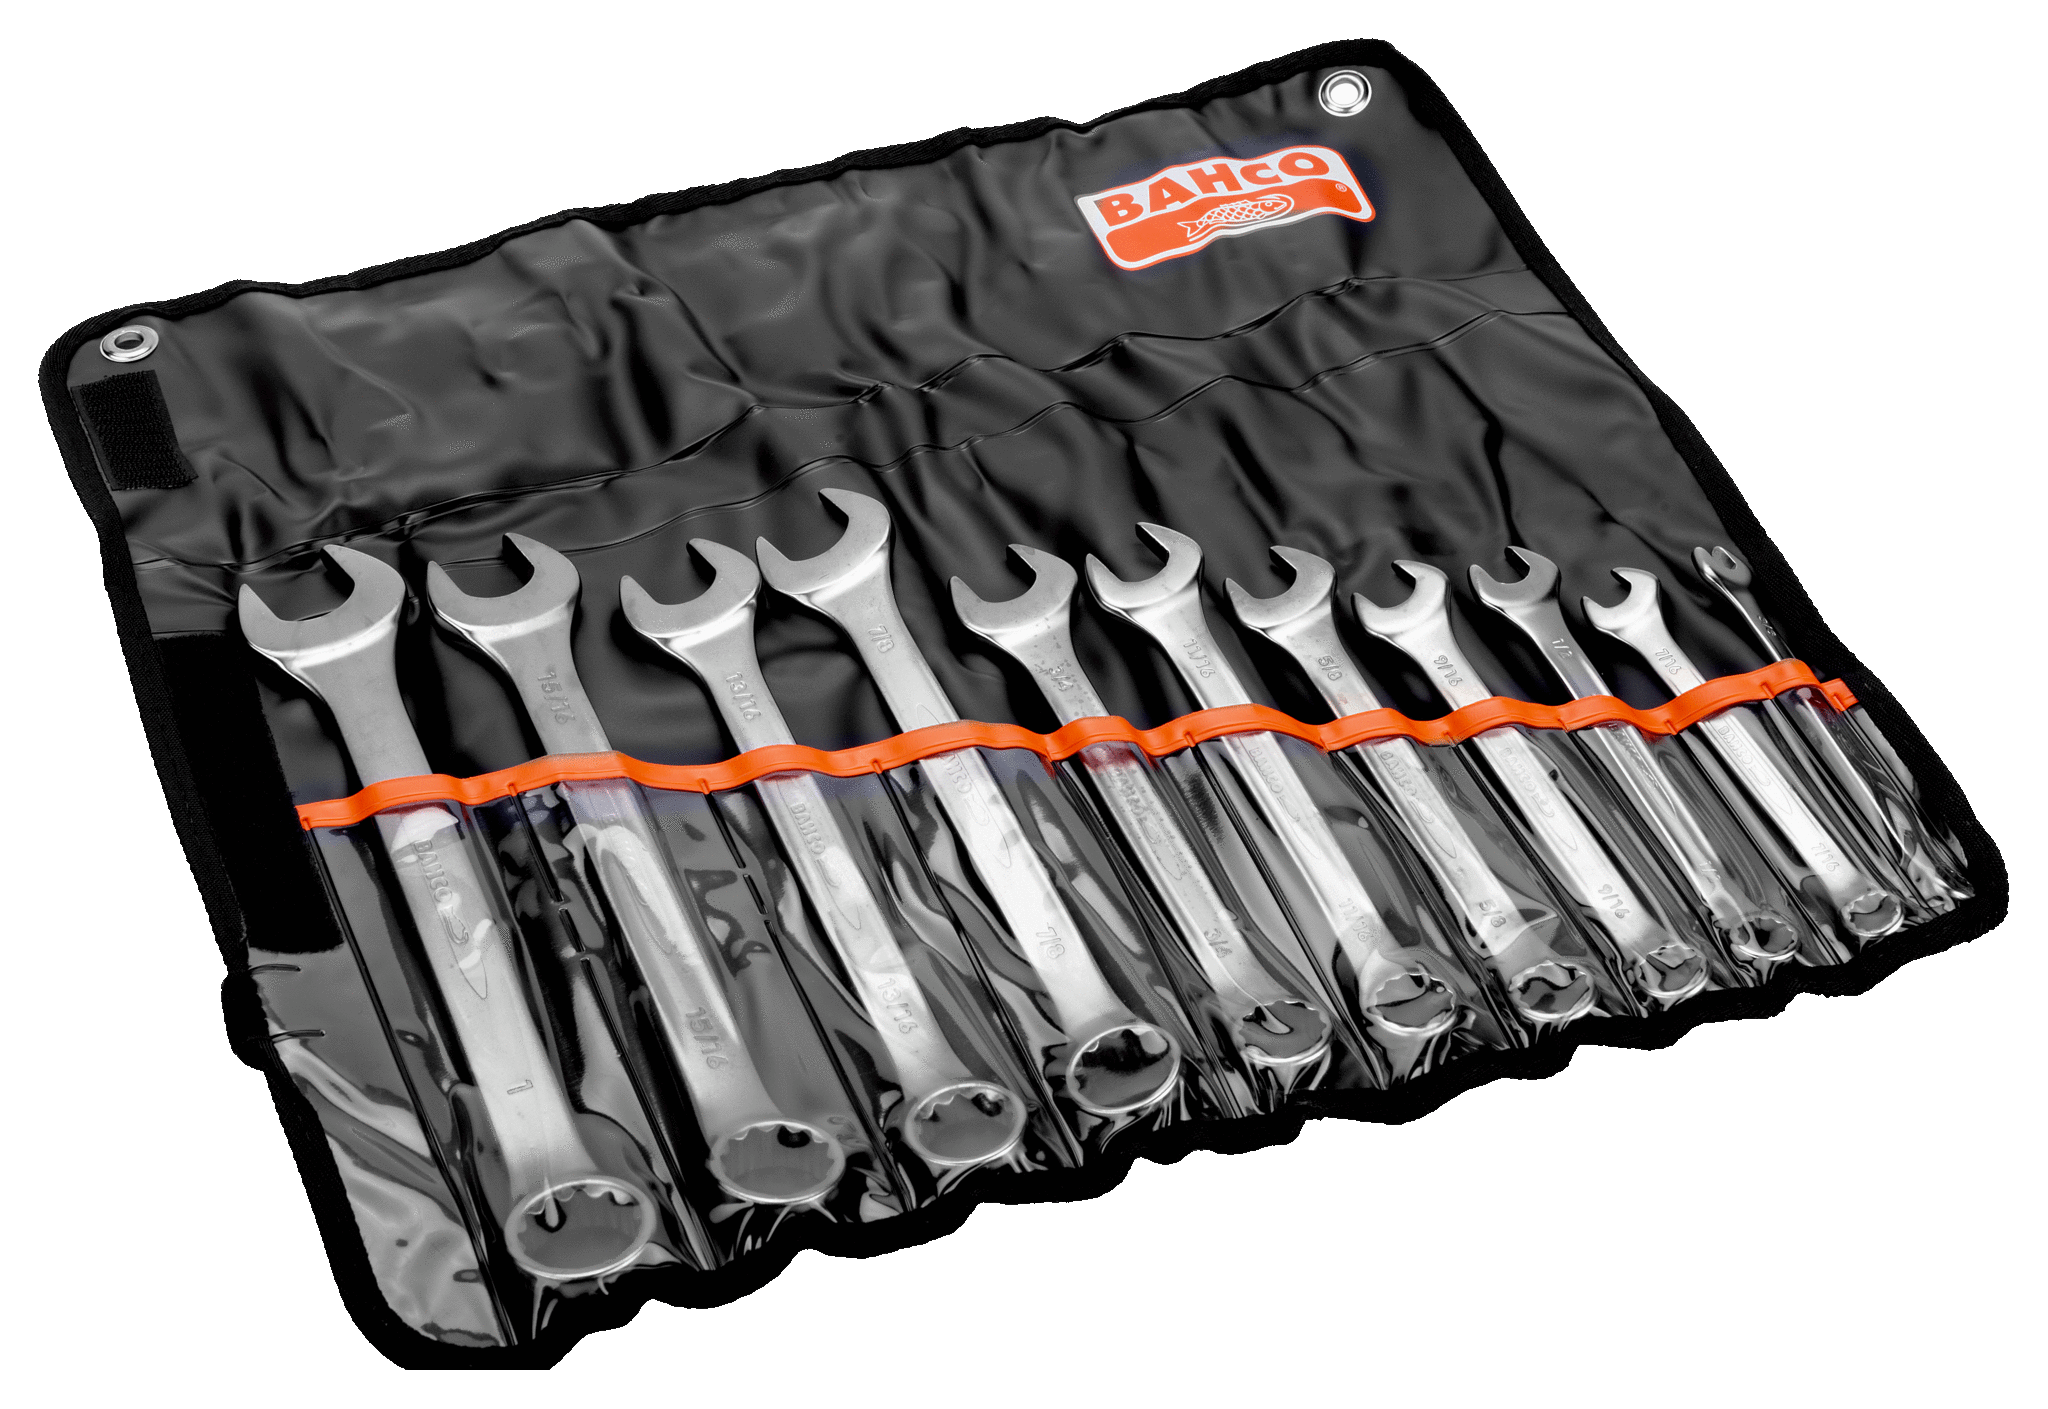 Chrome Vanadium Steel Wrenches Kit with Storage Keeper SAE & Metric KSEIBI 118408 24 Piece Combination Wrench Set 